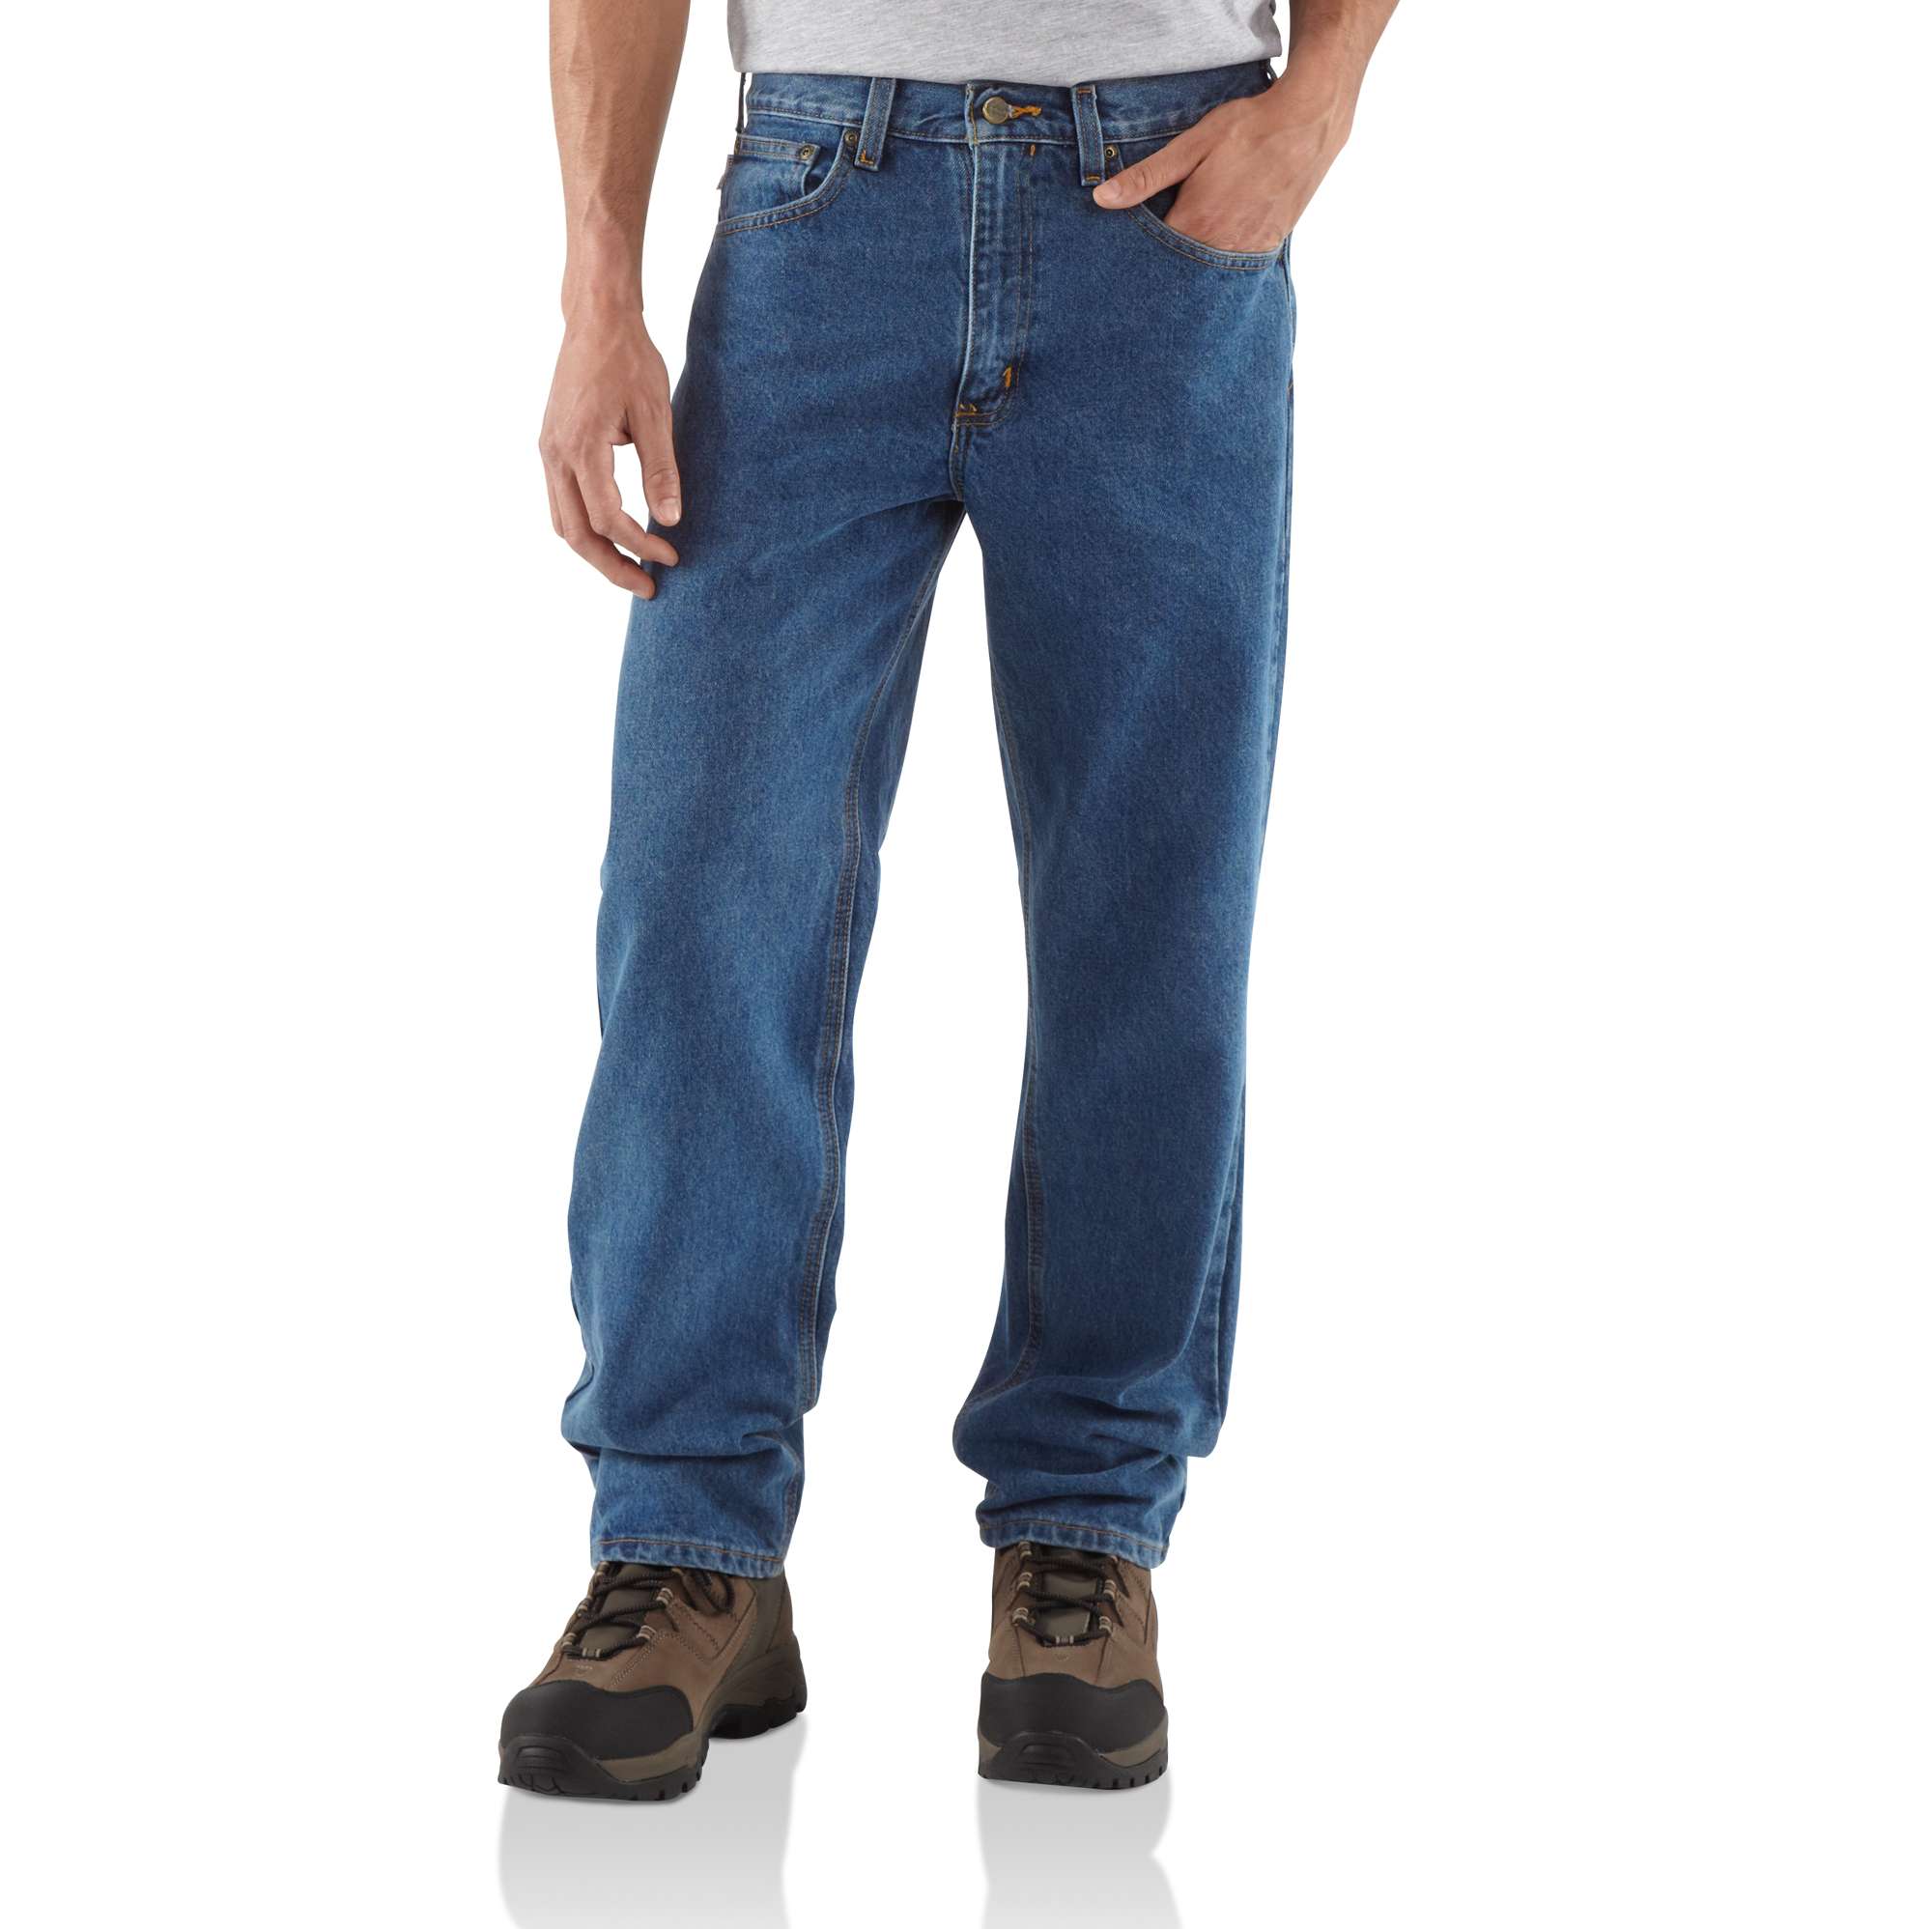 tall mens jeans 38 inseam